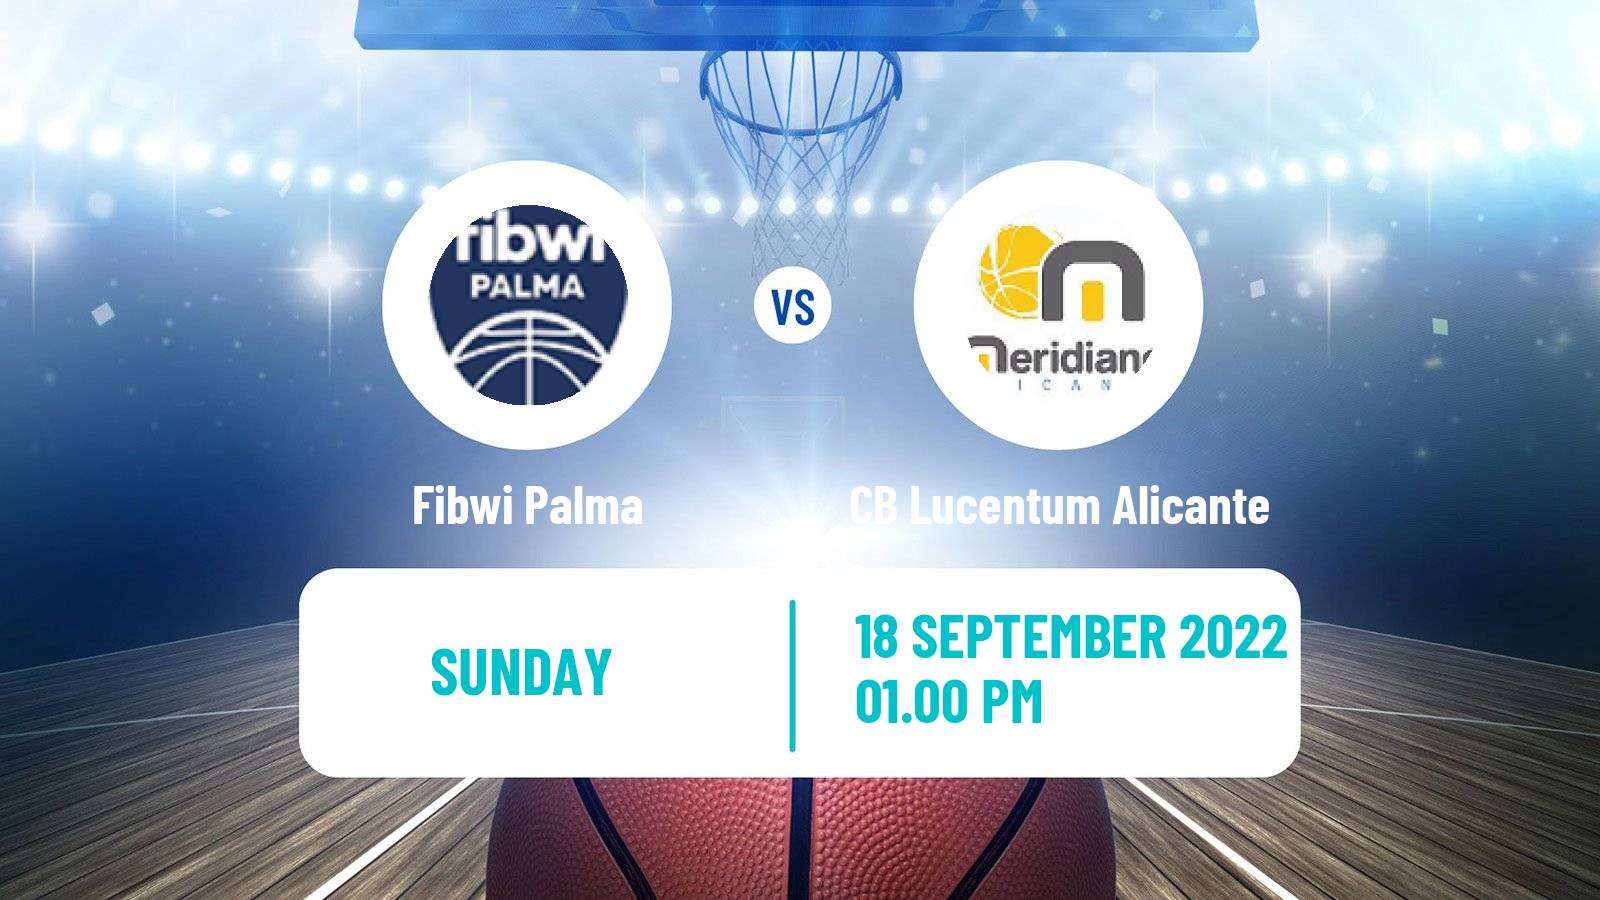 Basketball Club Friendly Basketball Fibwi Palma - CB Lucentum Alicante